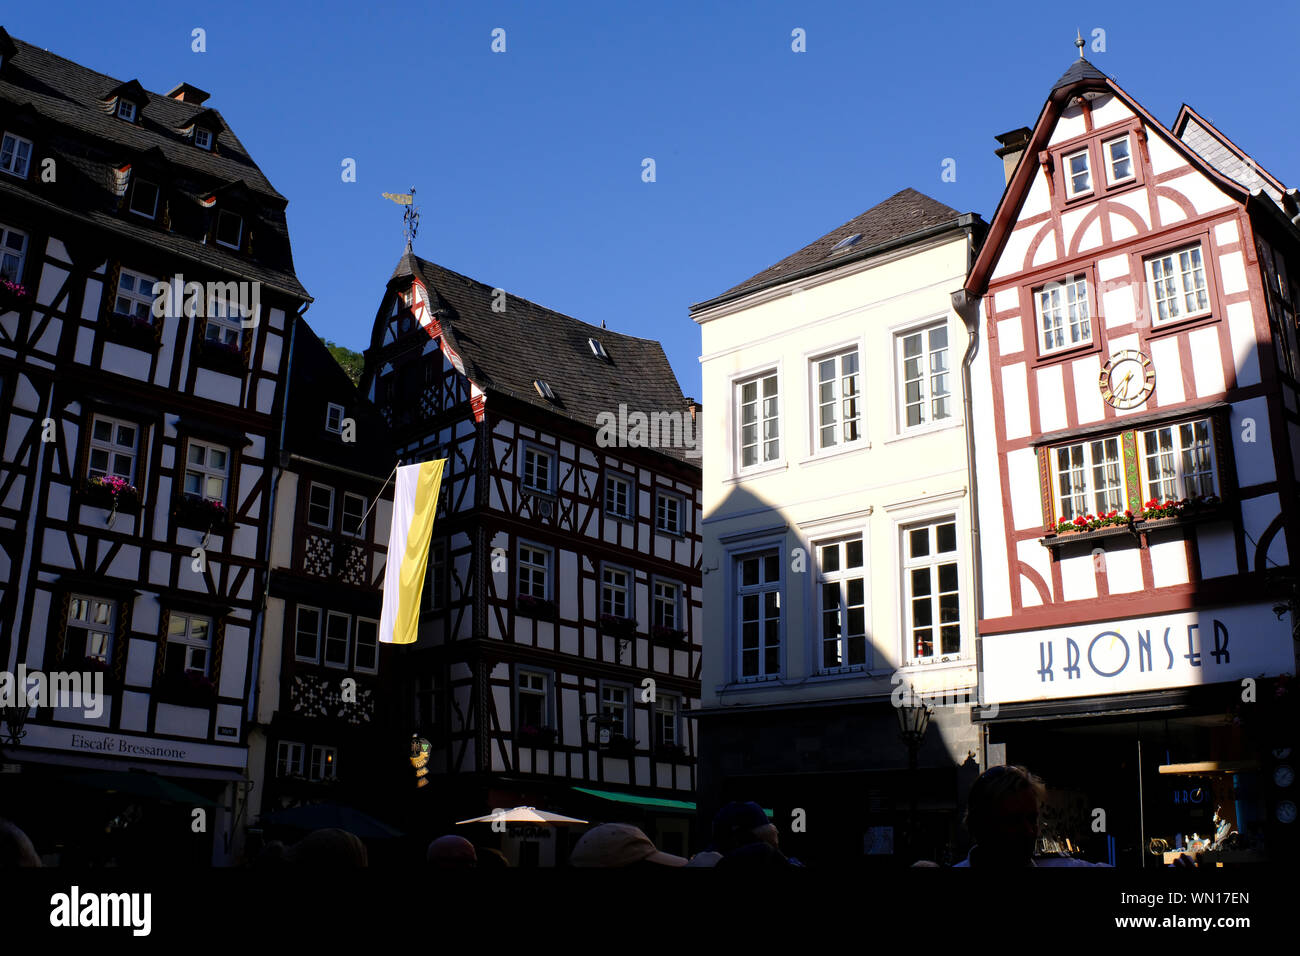 Pretty street scene and Marketplace in Bernkastel-Kues, Germany Stock Photo